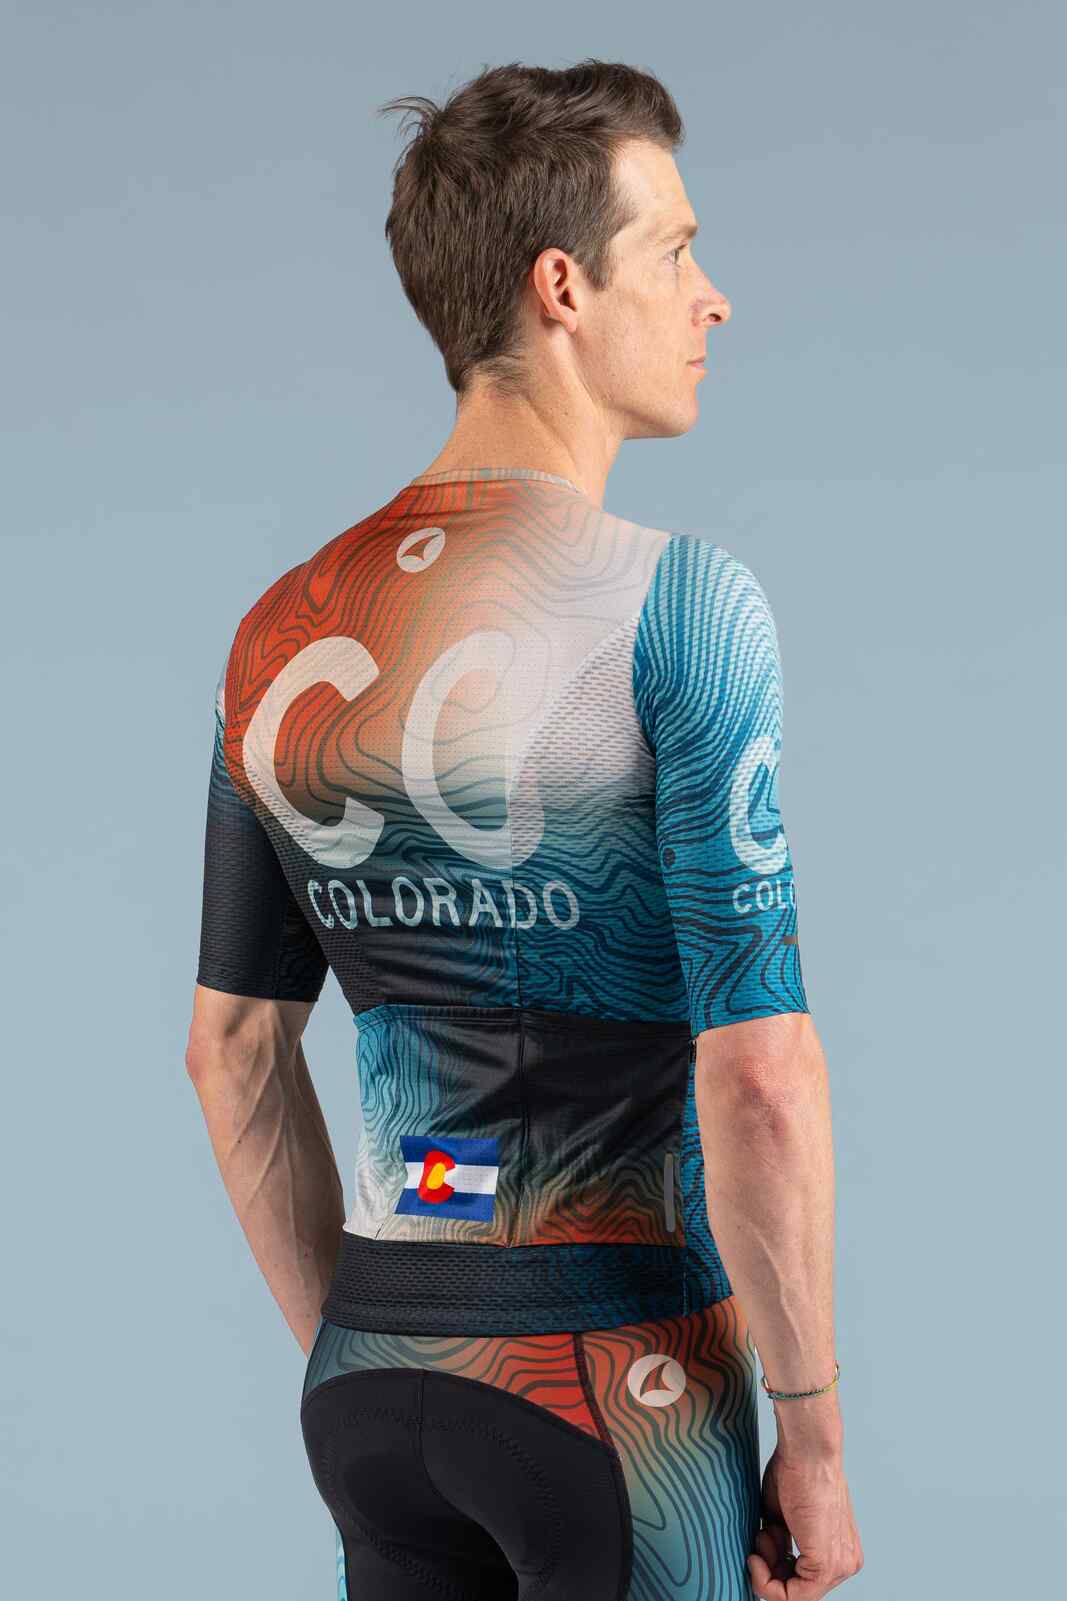 Men's Colorado Geo Mesh Cycling Jersey - Back View